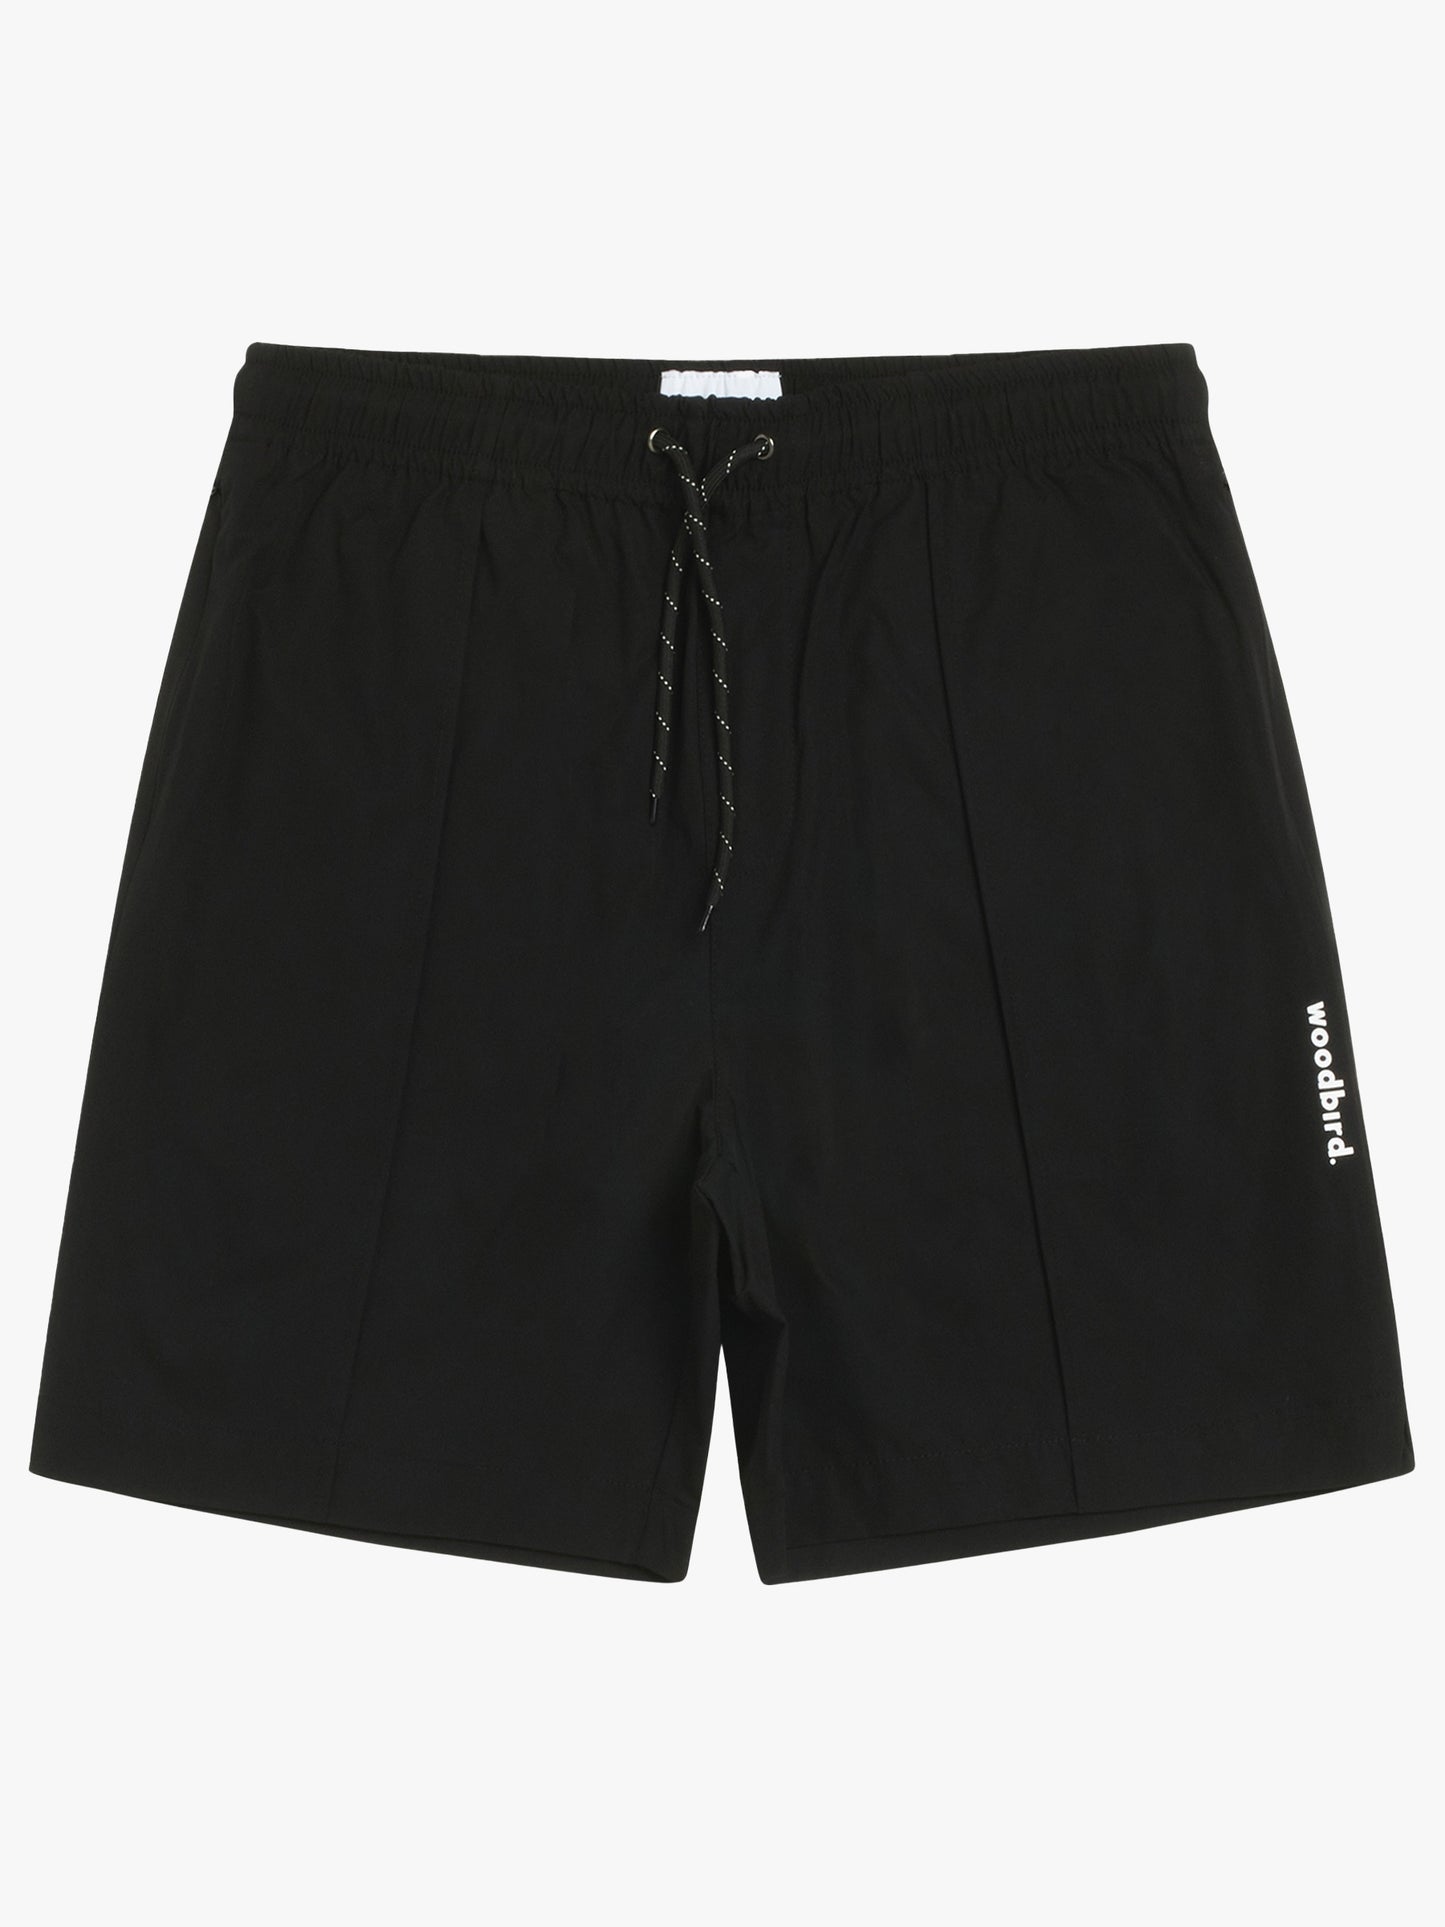 Woodbird Hansi Tech Shorts Shorts Black